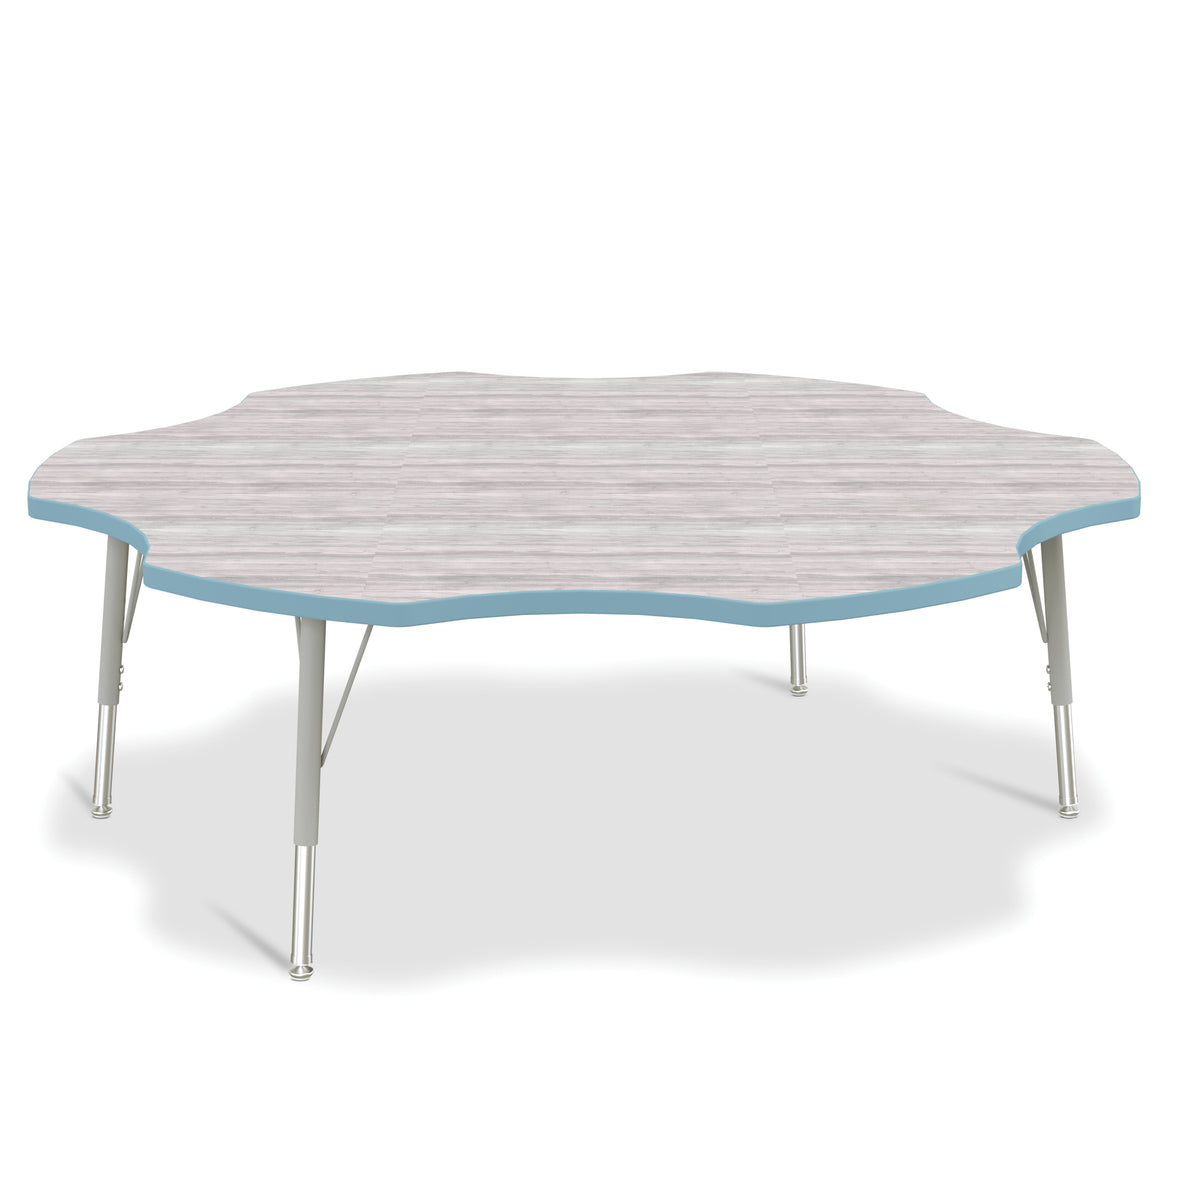 6458JCE452, Berries Six Leaf Activity Table - E-height - Driftwood Gray/Coastal Blue/Gray